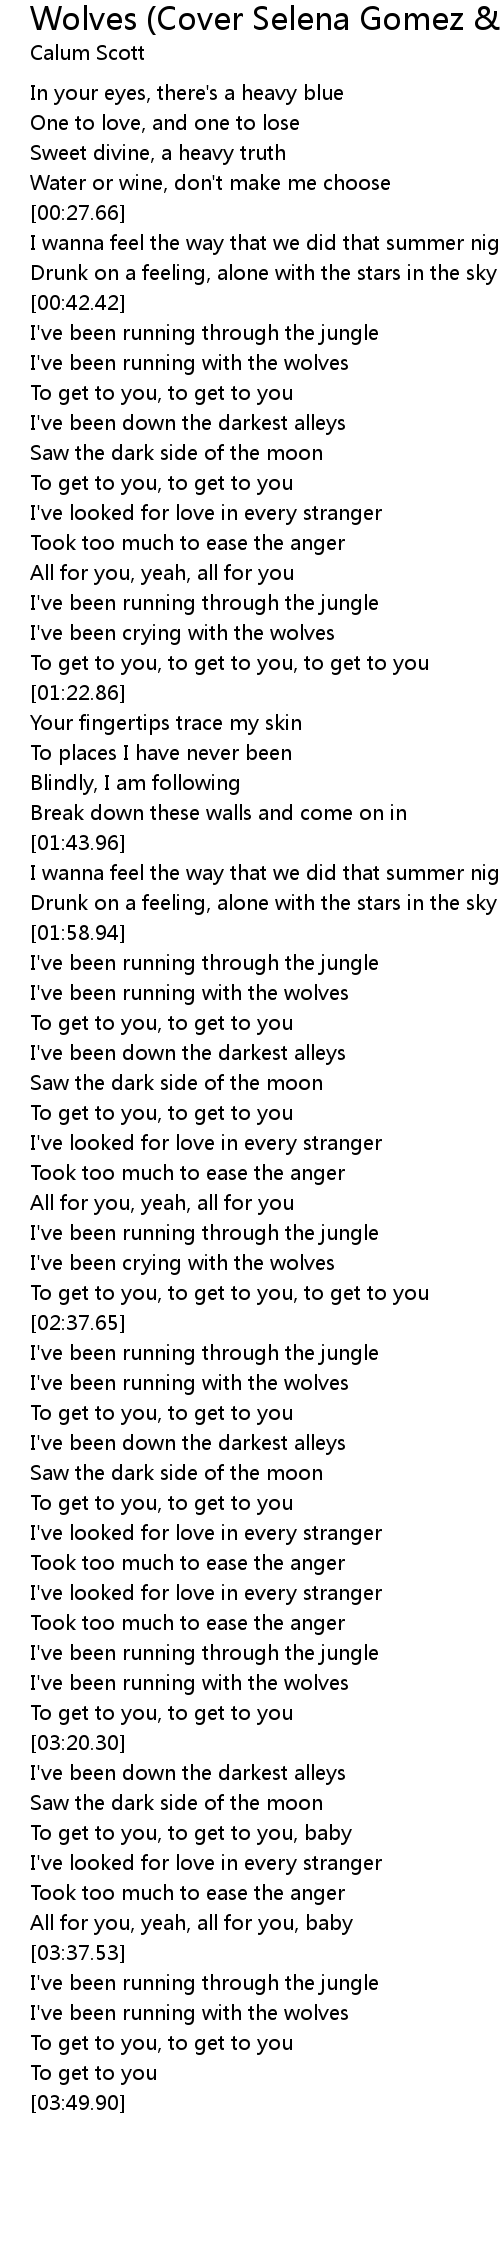 Wolves Cover Selena Gomez Mashmello Lyrics Follow Lyrics